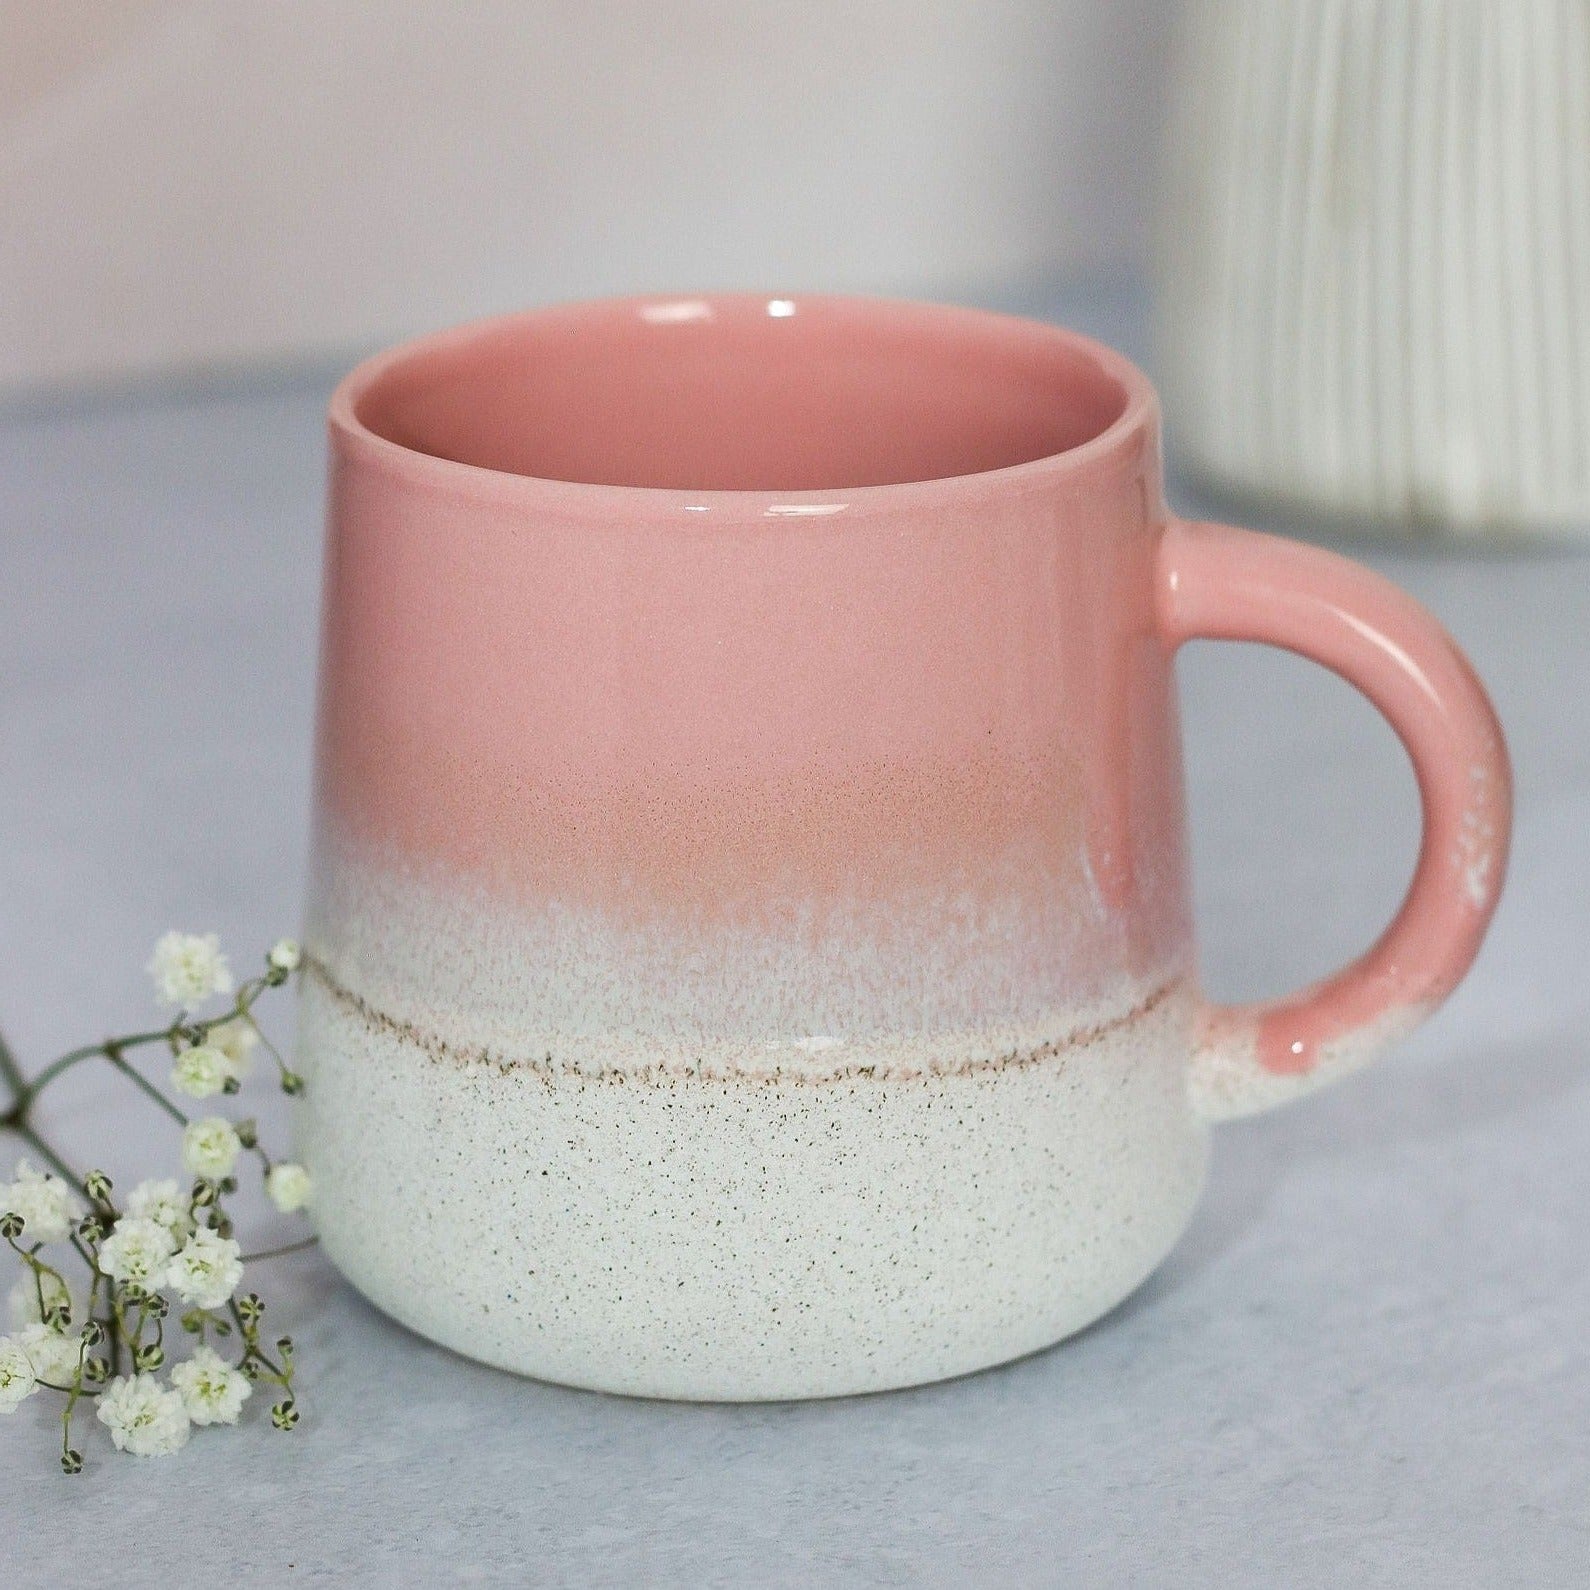 Pink mojave mug on grey background